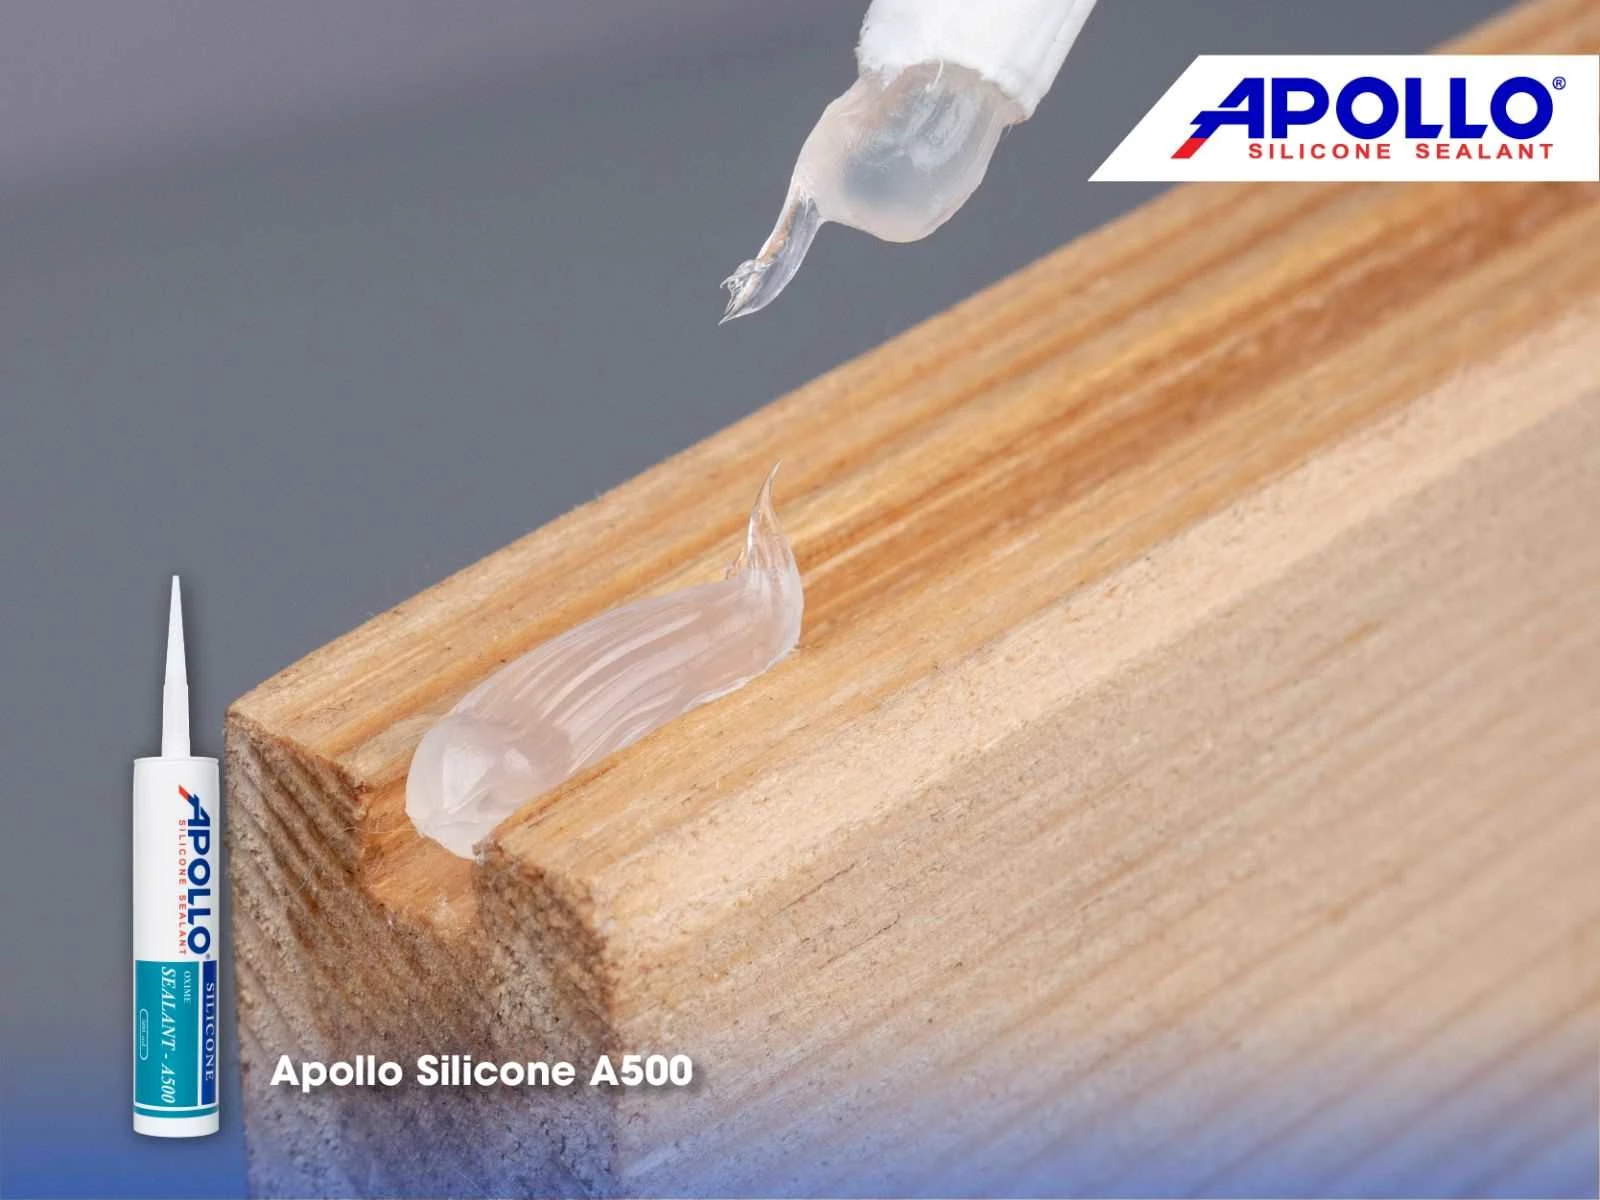 Thời gian lưu hóa bề mặt của Apollo Silicone A500 khoảng 8 - 12 phút. 